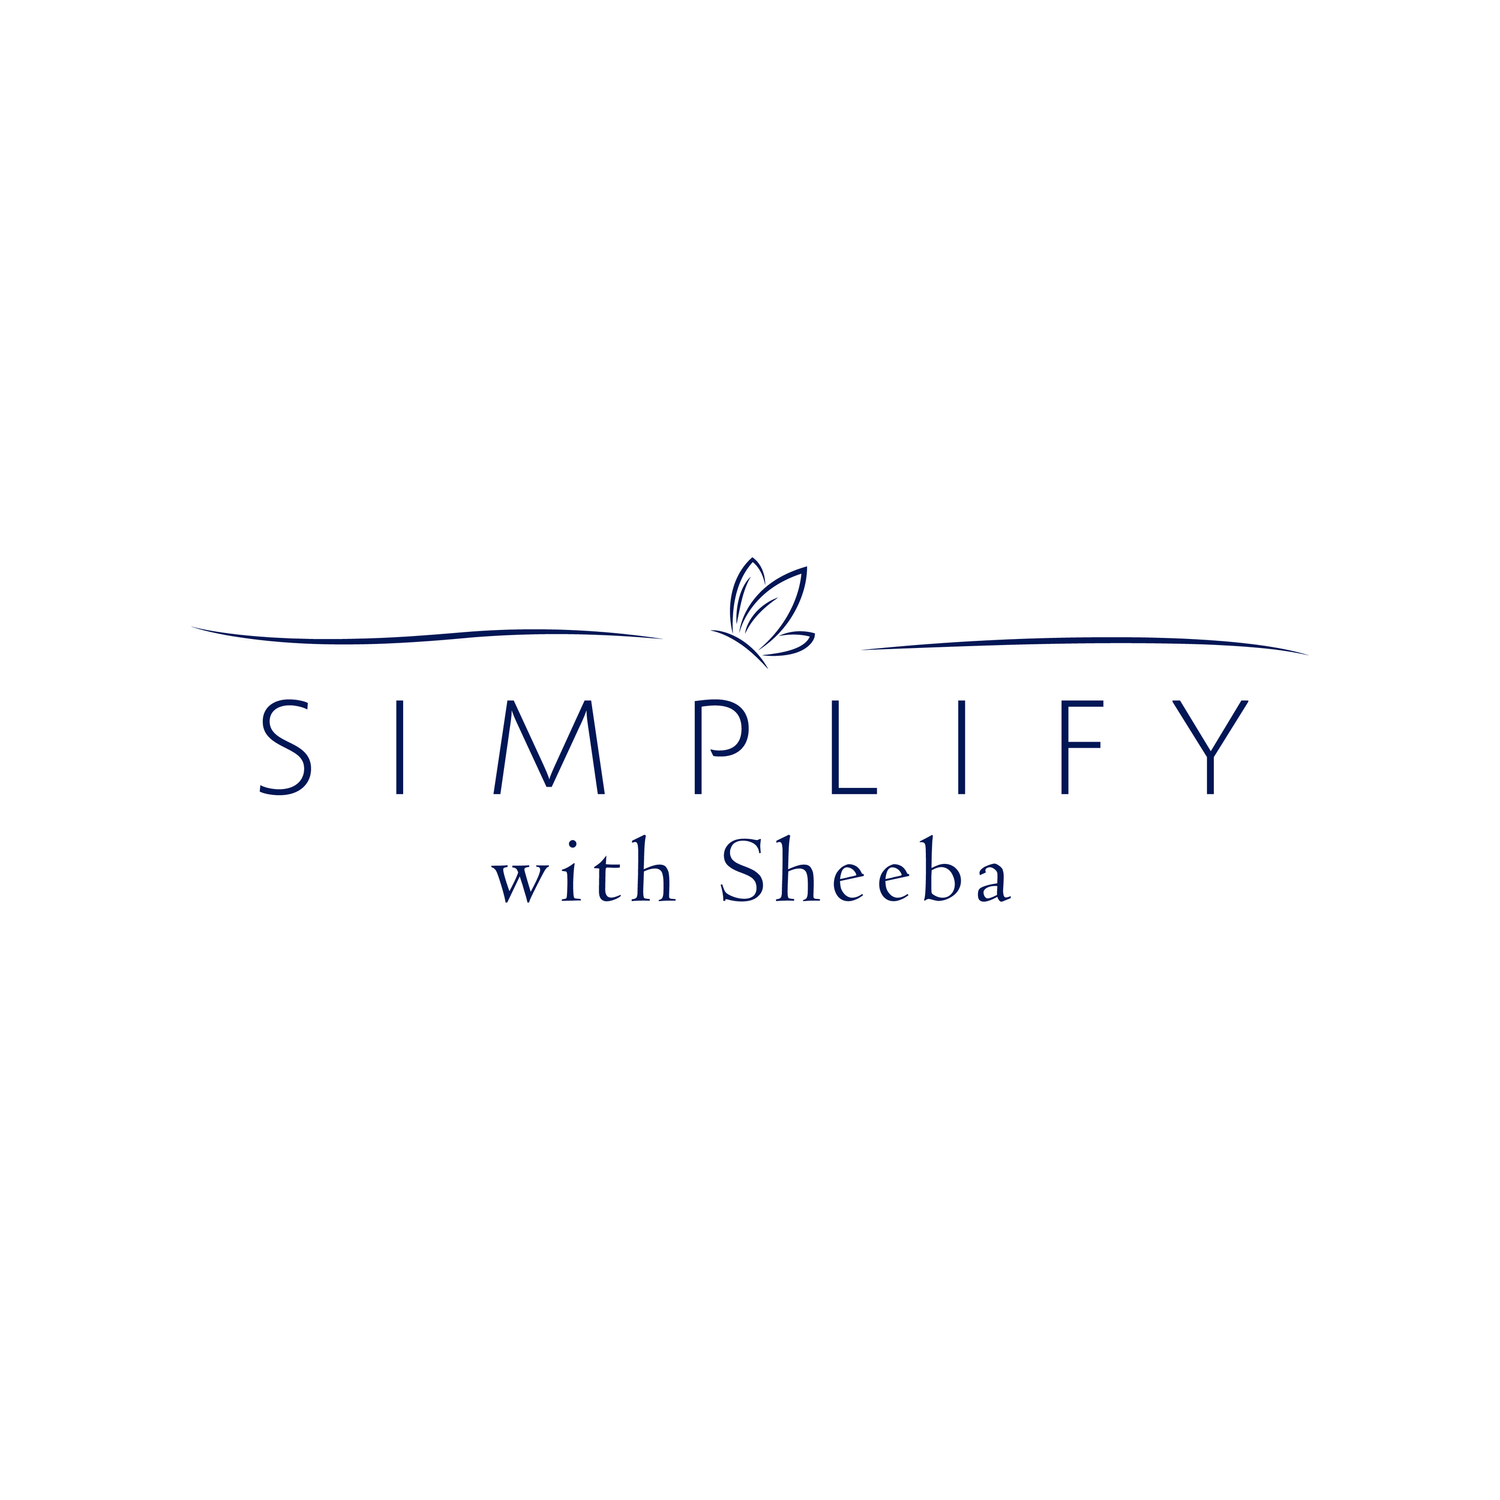 Simplify with Sheeba